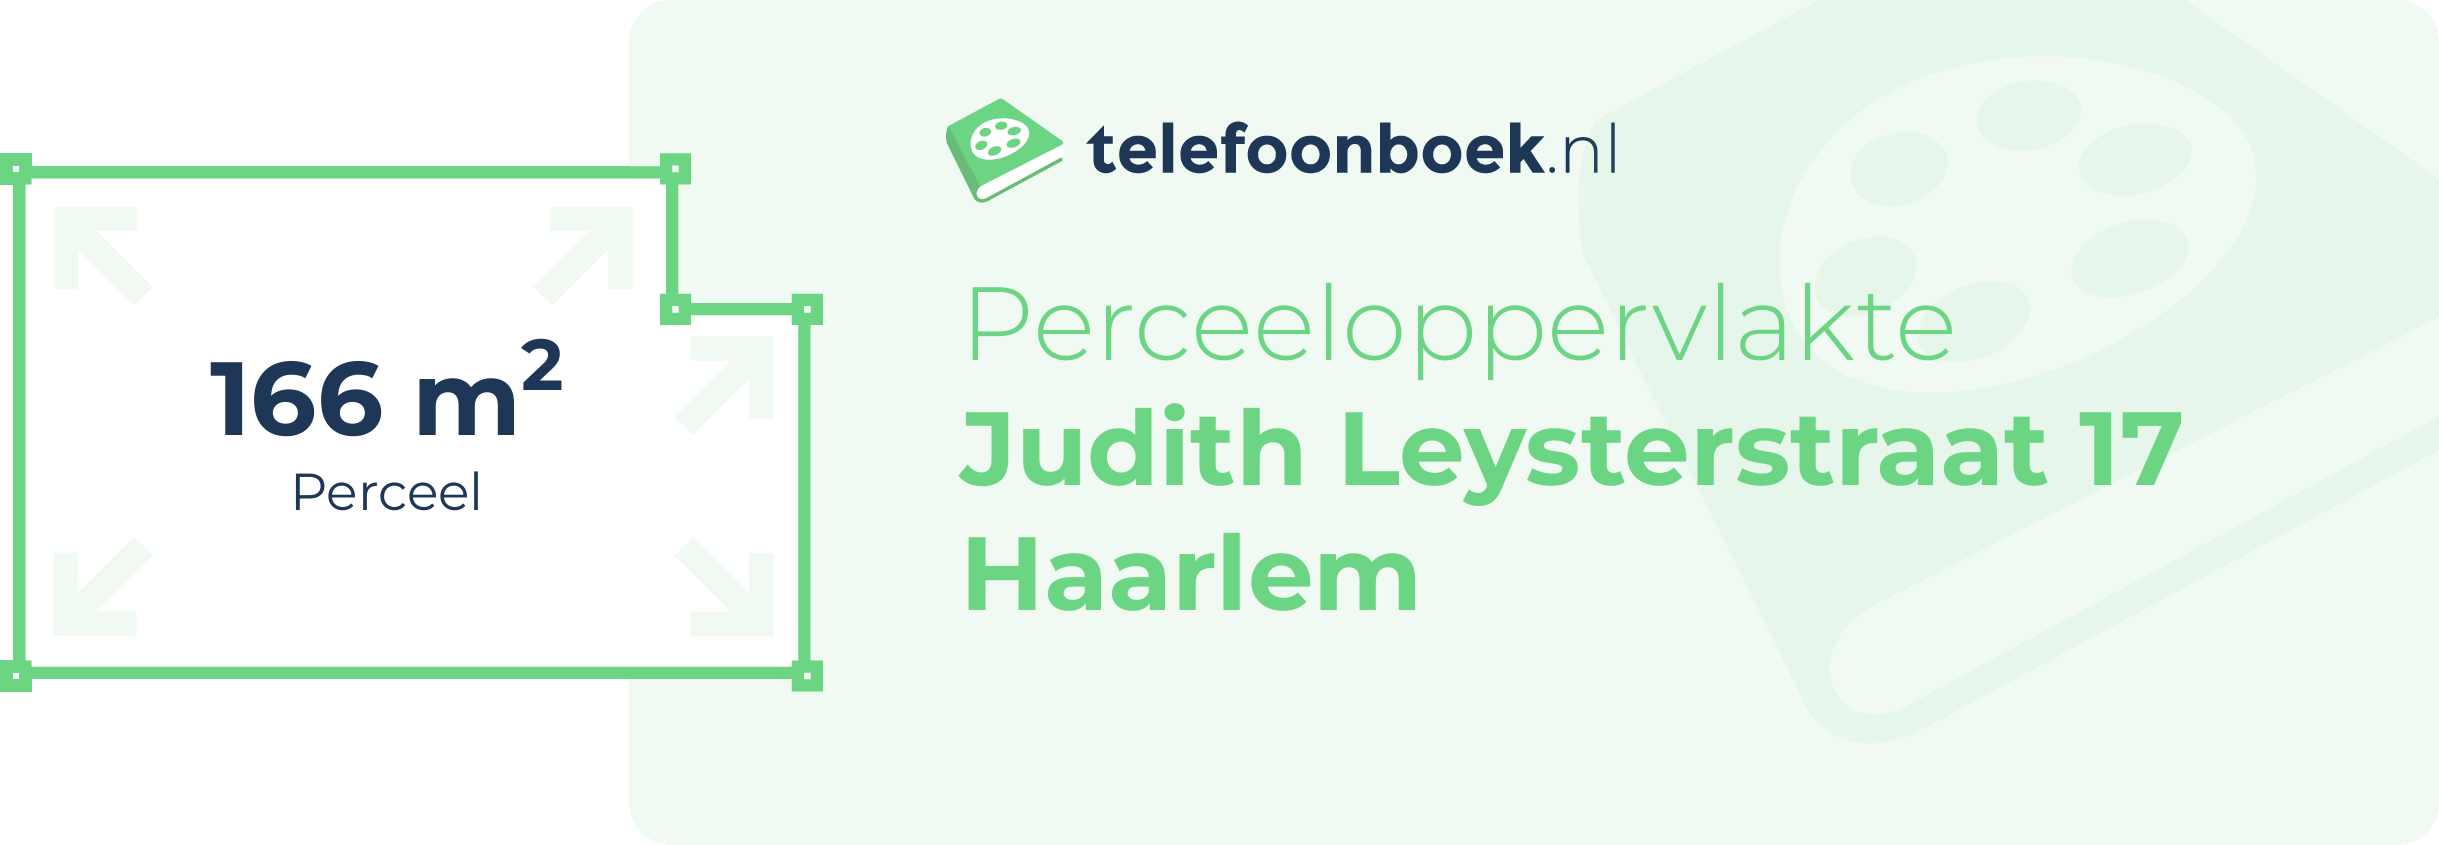 Perceeloppervlakte Judith Leysterstraat 17 Haarlem